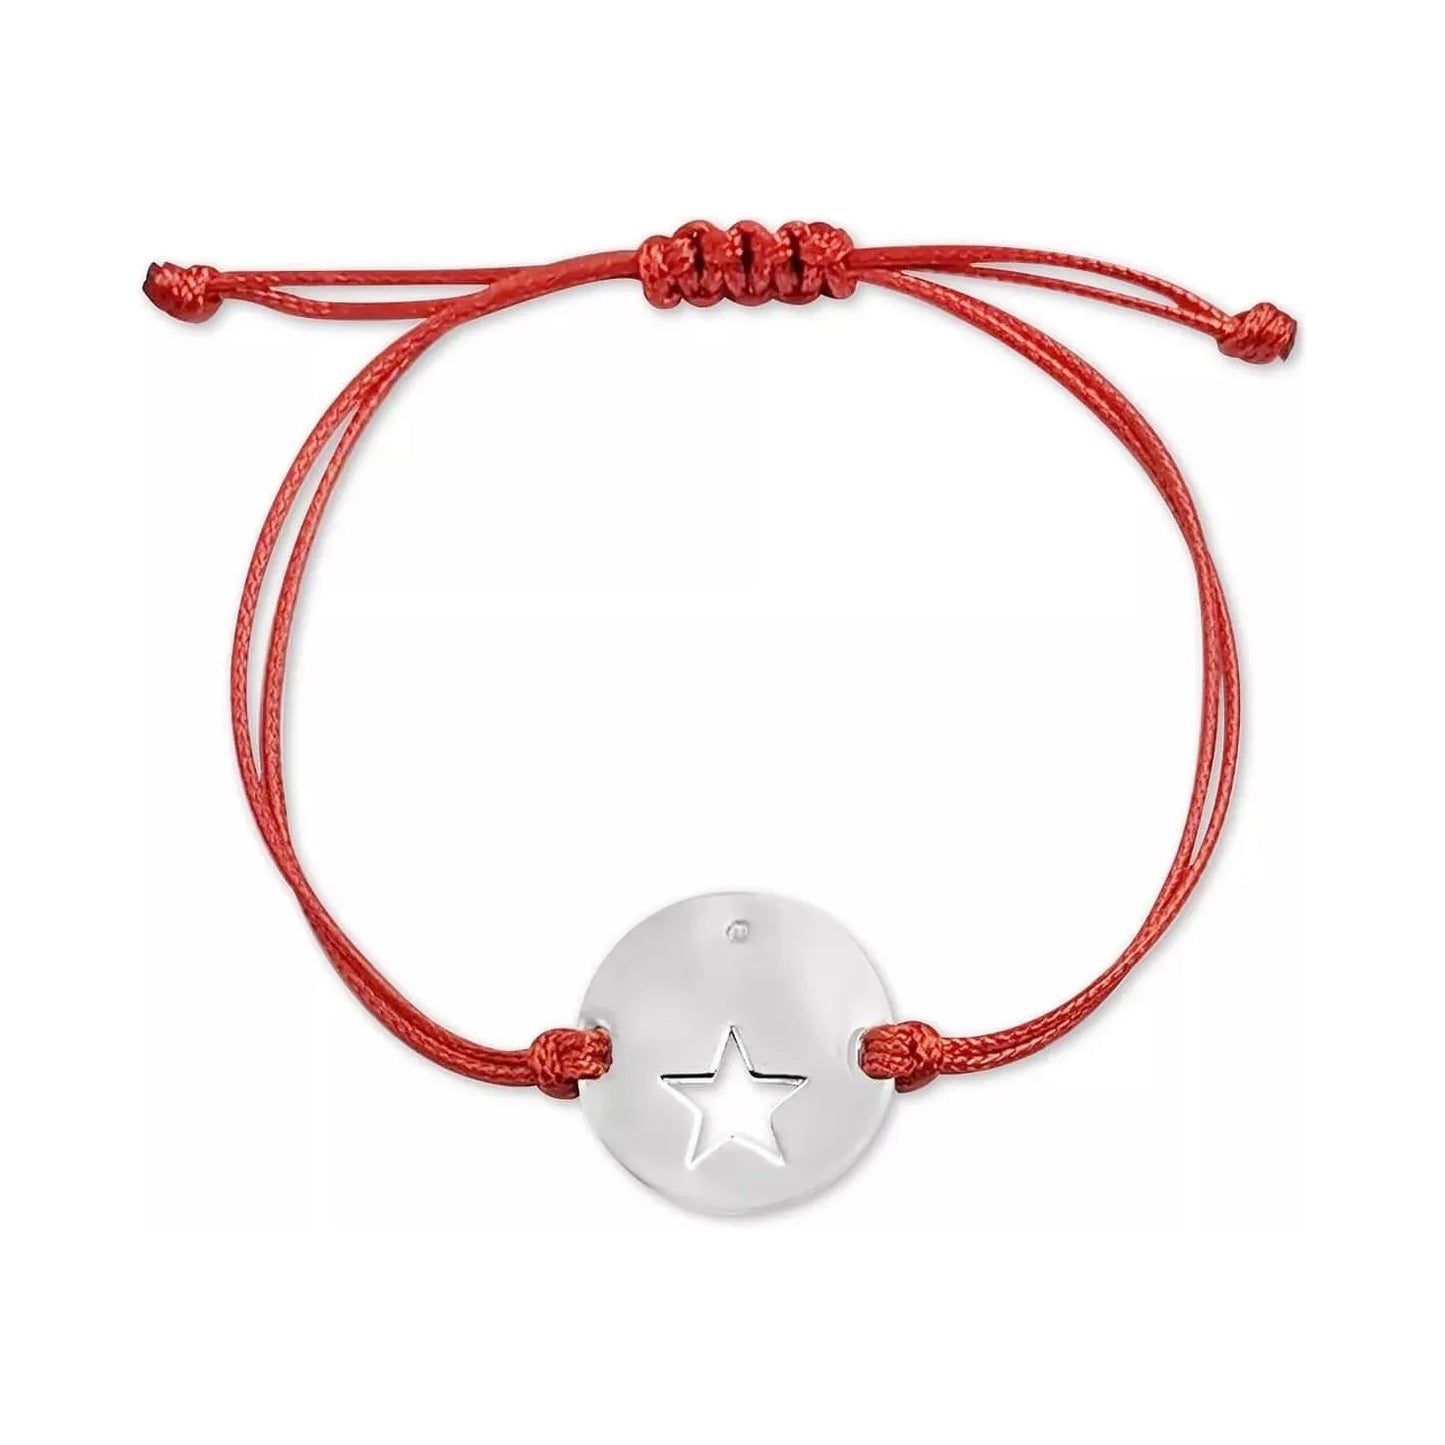 Macy's-Bracelet for Women - Red/Silver (Believe Slider Bracelet) - Brandat Outlet